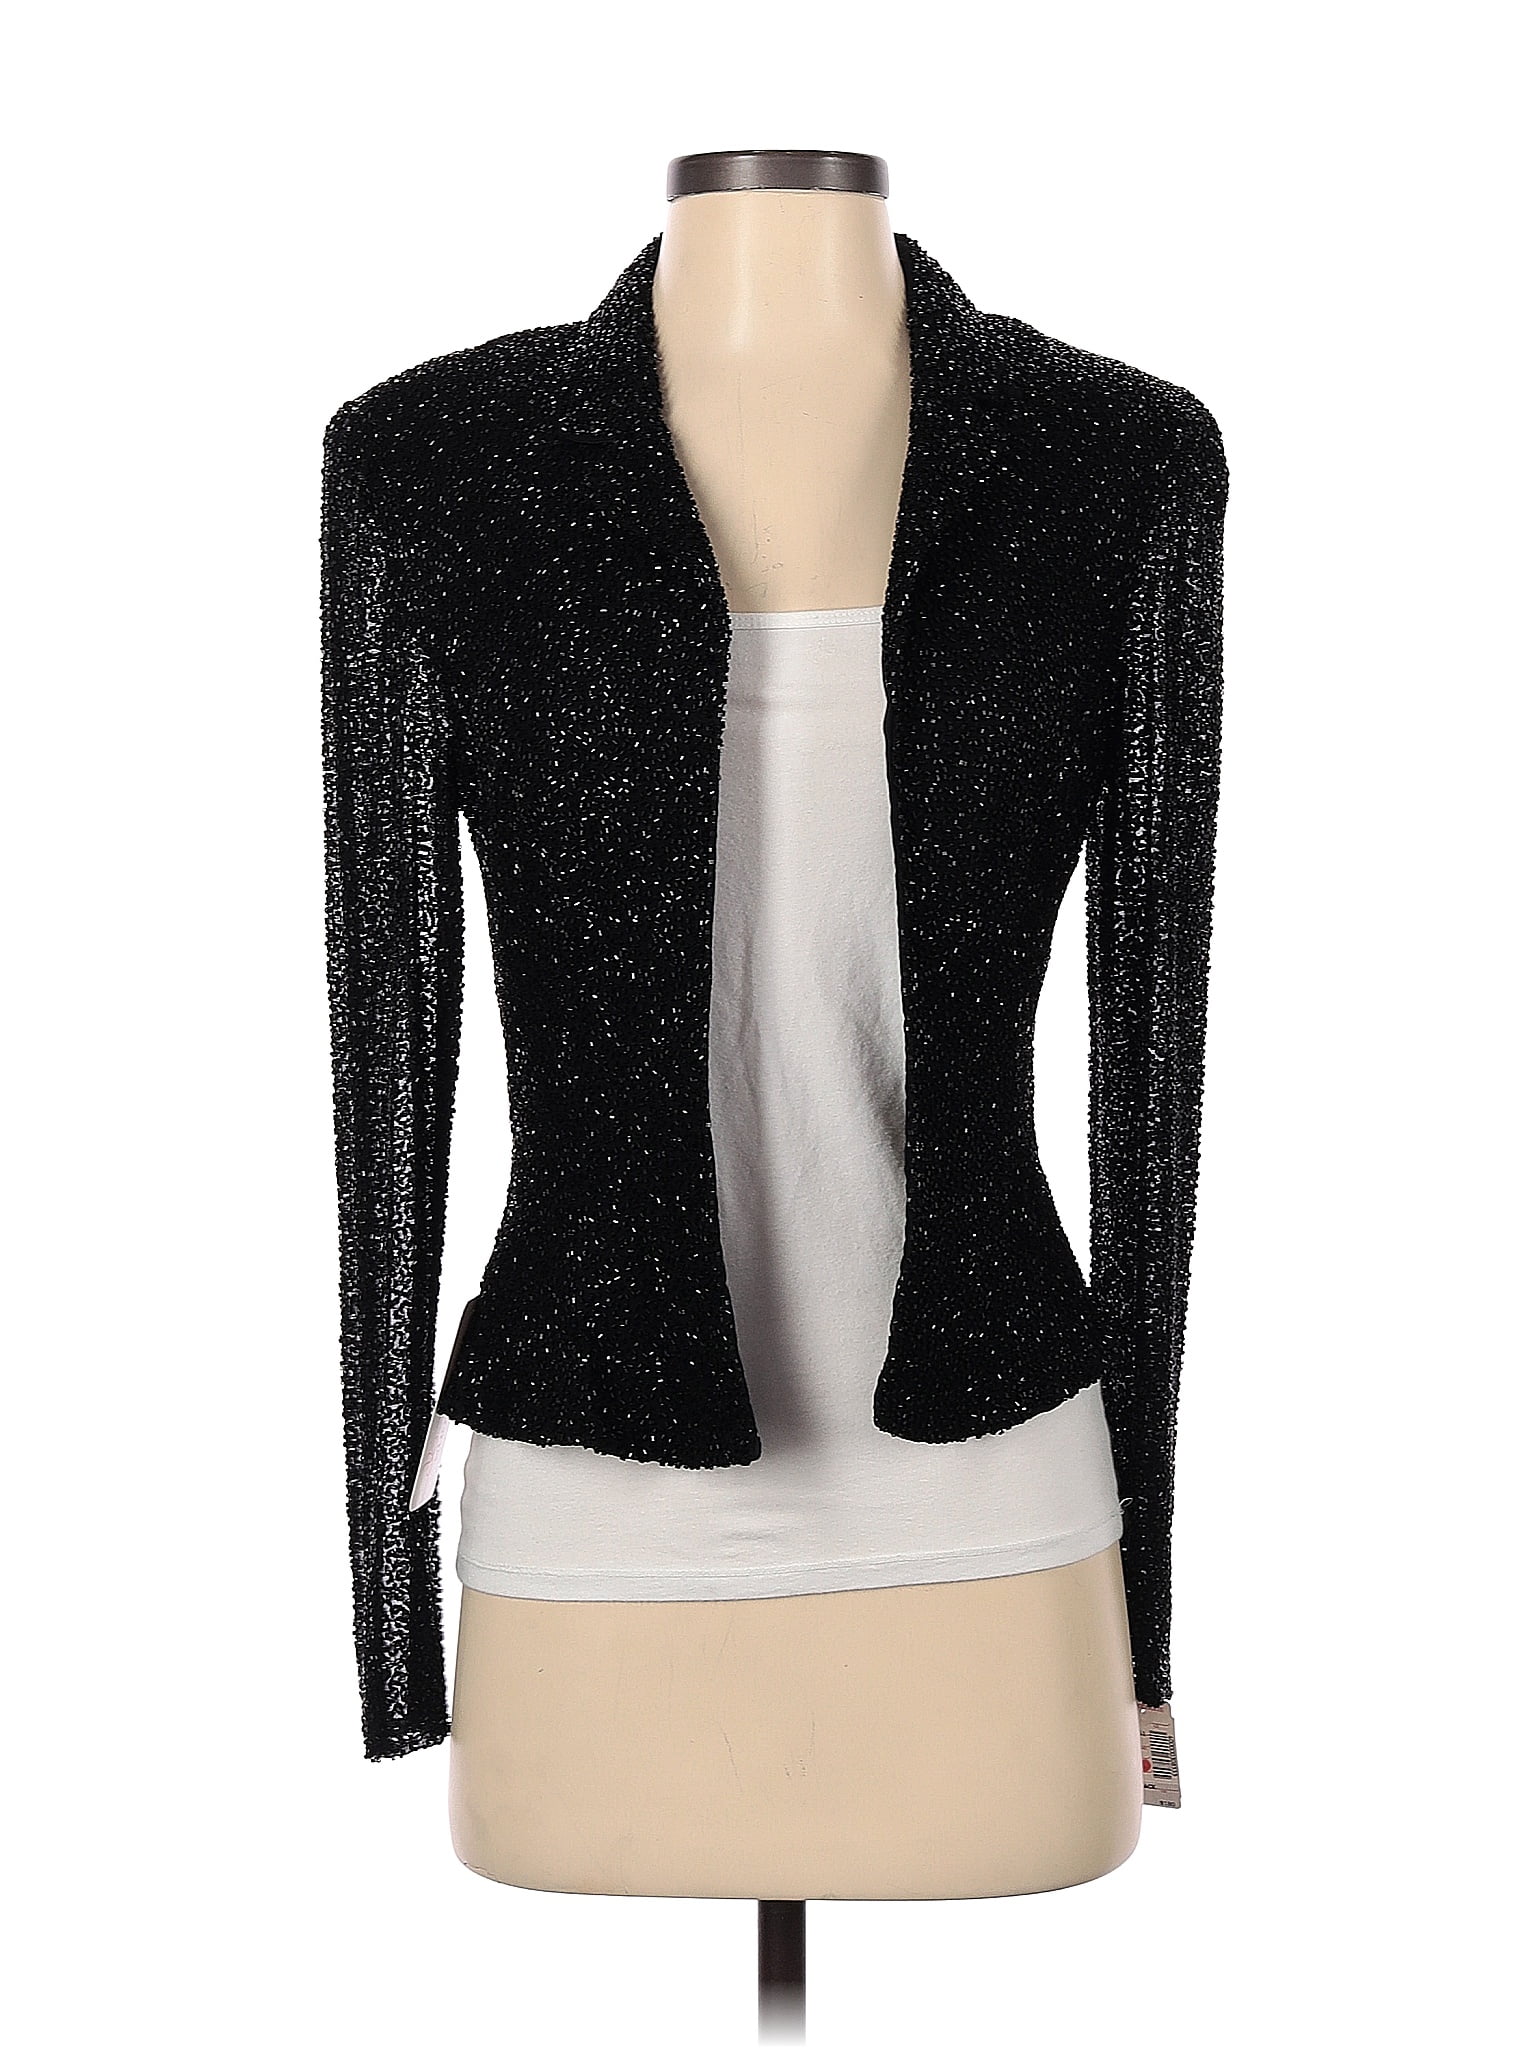 Cecily Brown 100% Silk Black Jacket Size S - 70% off | thredUP